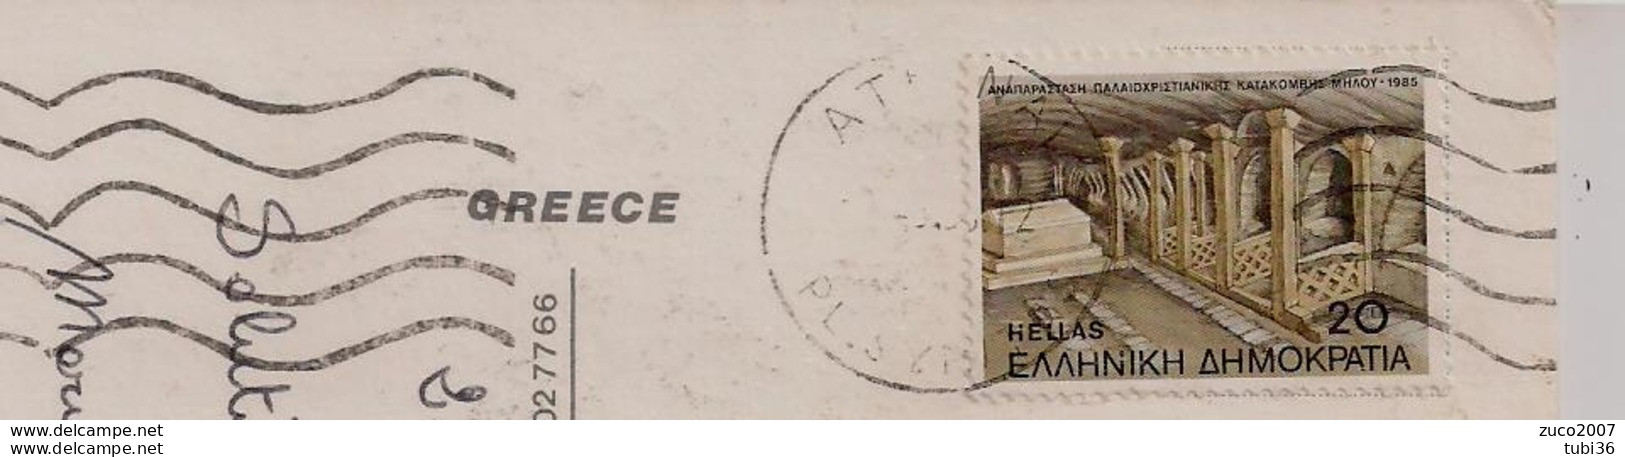 GRECIA - CATACOMBE 20 - 1985 - CARYATIDES - ITALIA - Briefe U. Dokumente